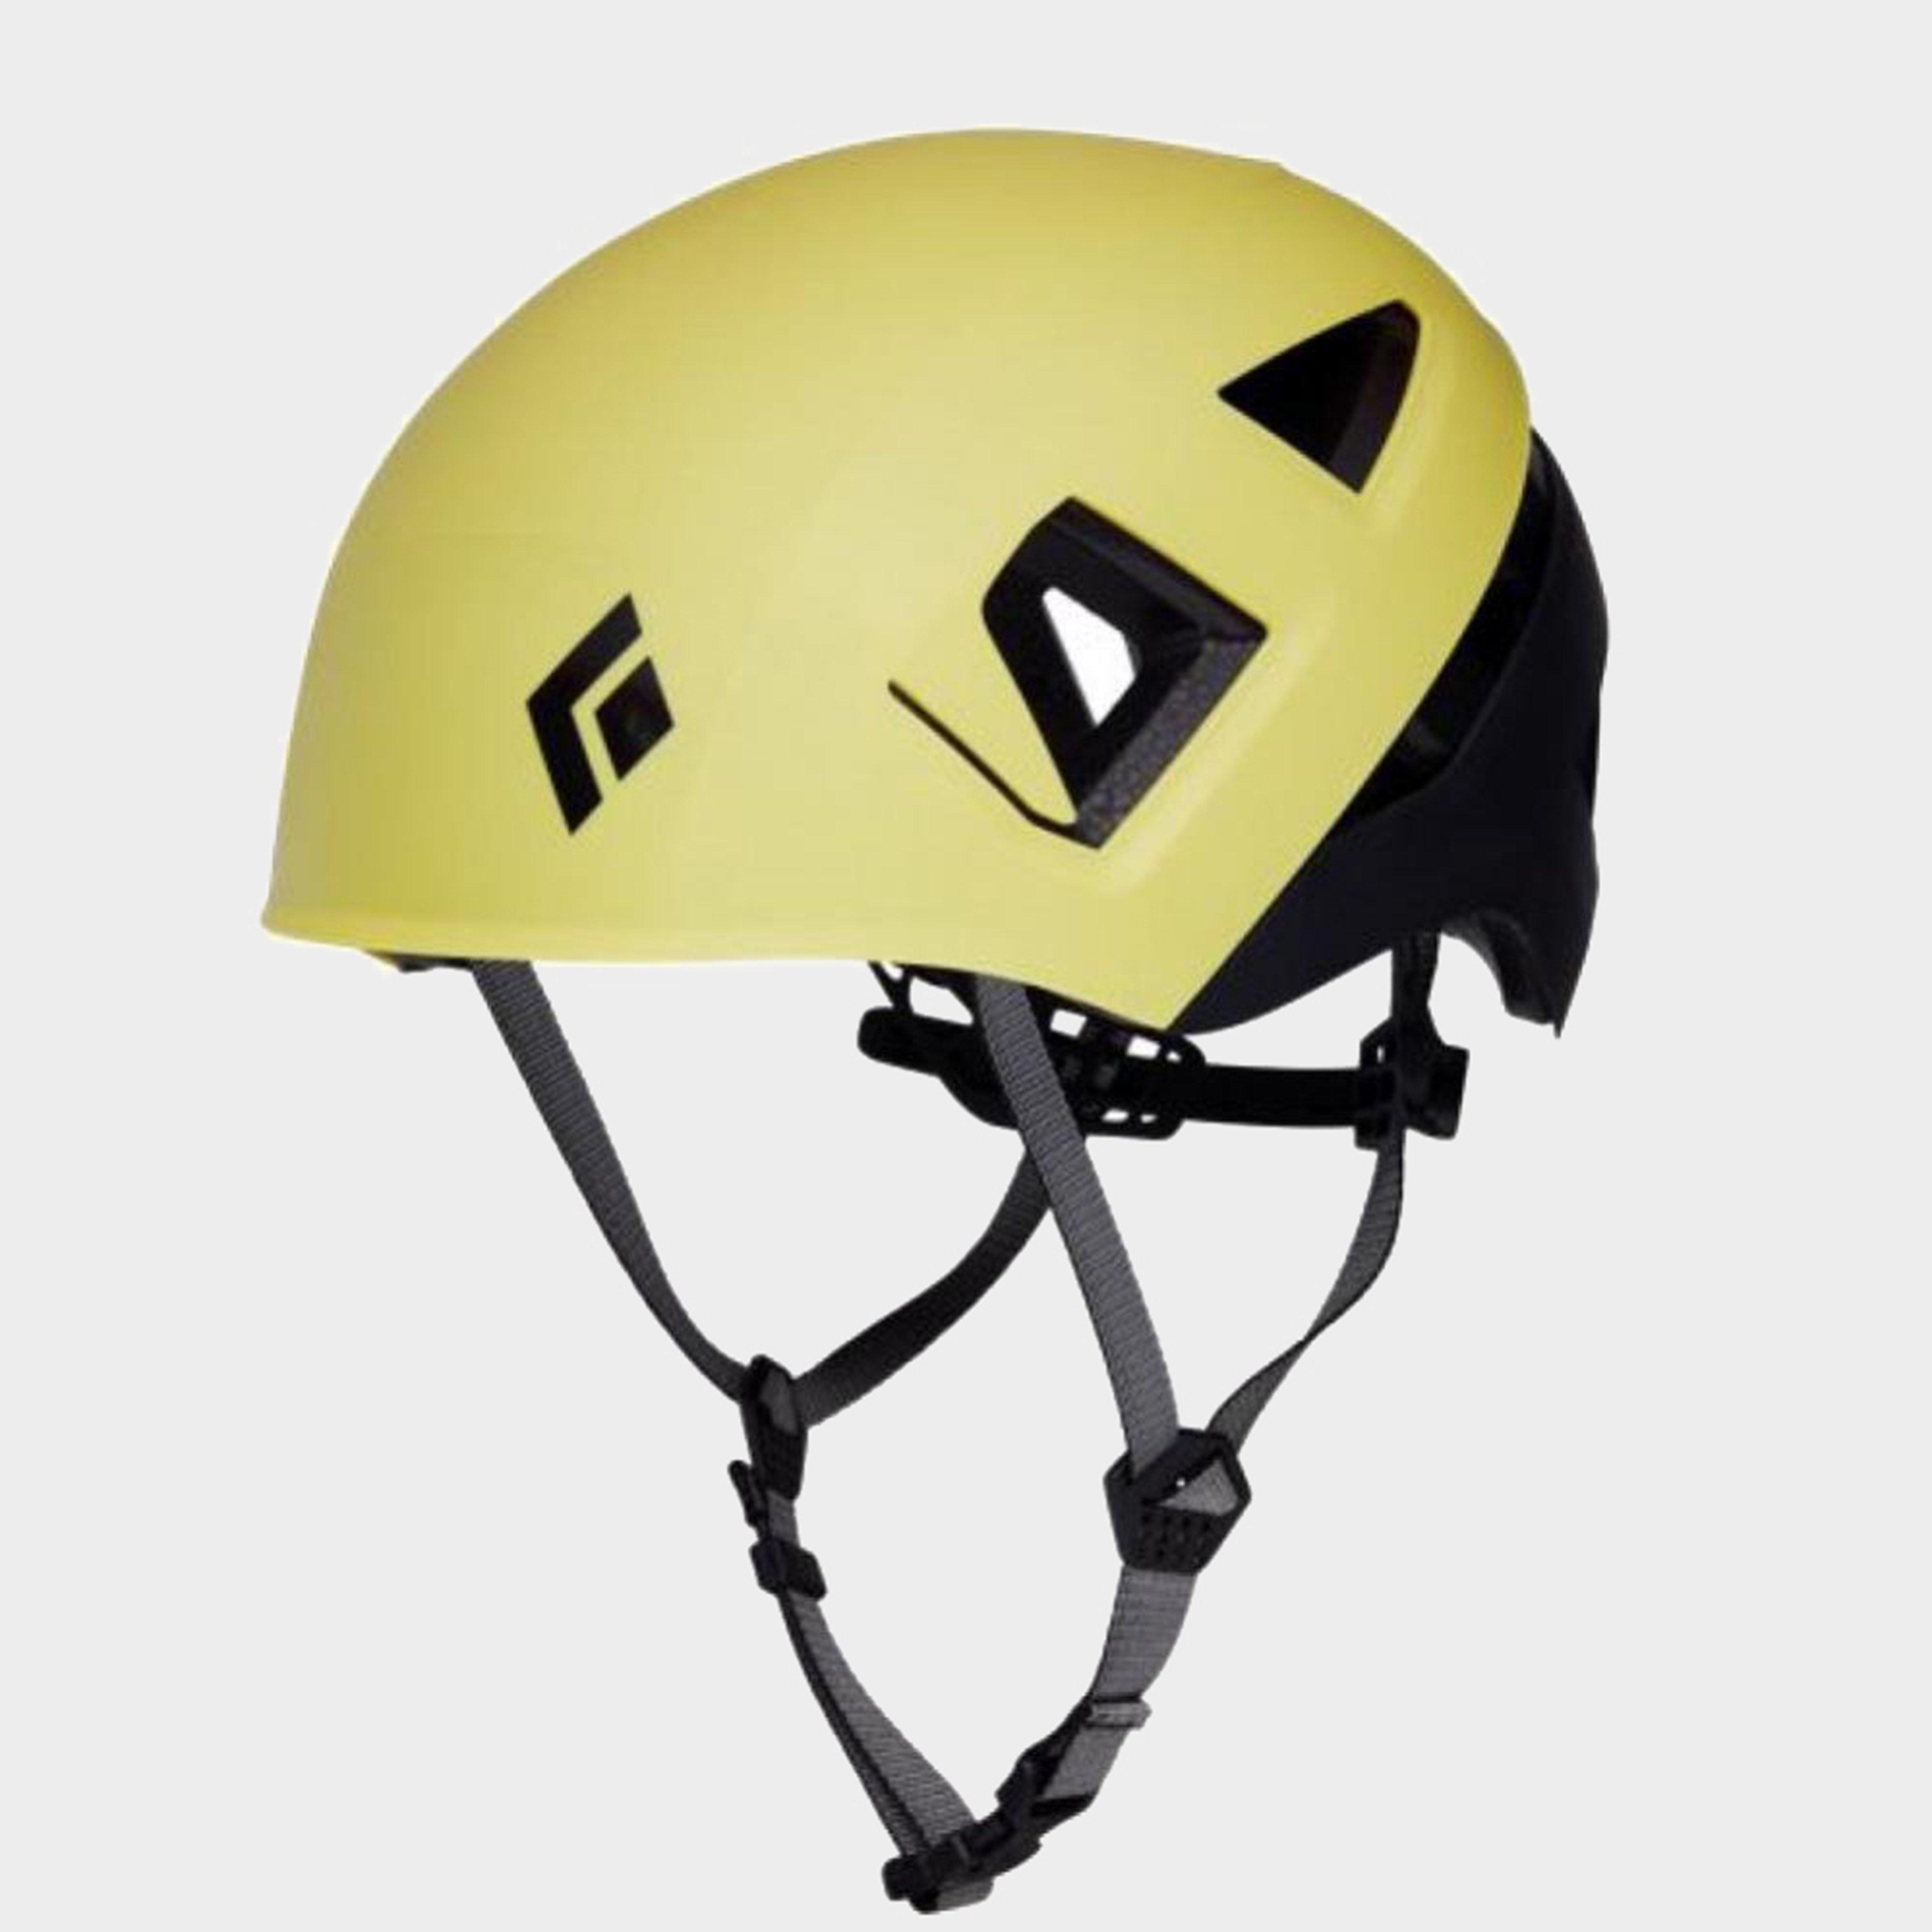 Black Diamond Black Diamond Captain Climbing Helmet - Mid Yellow, Mid Yellow